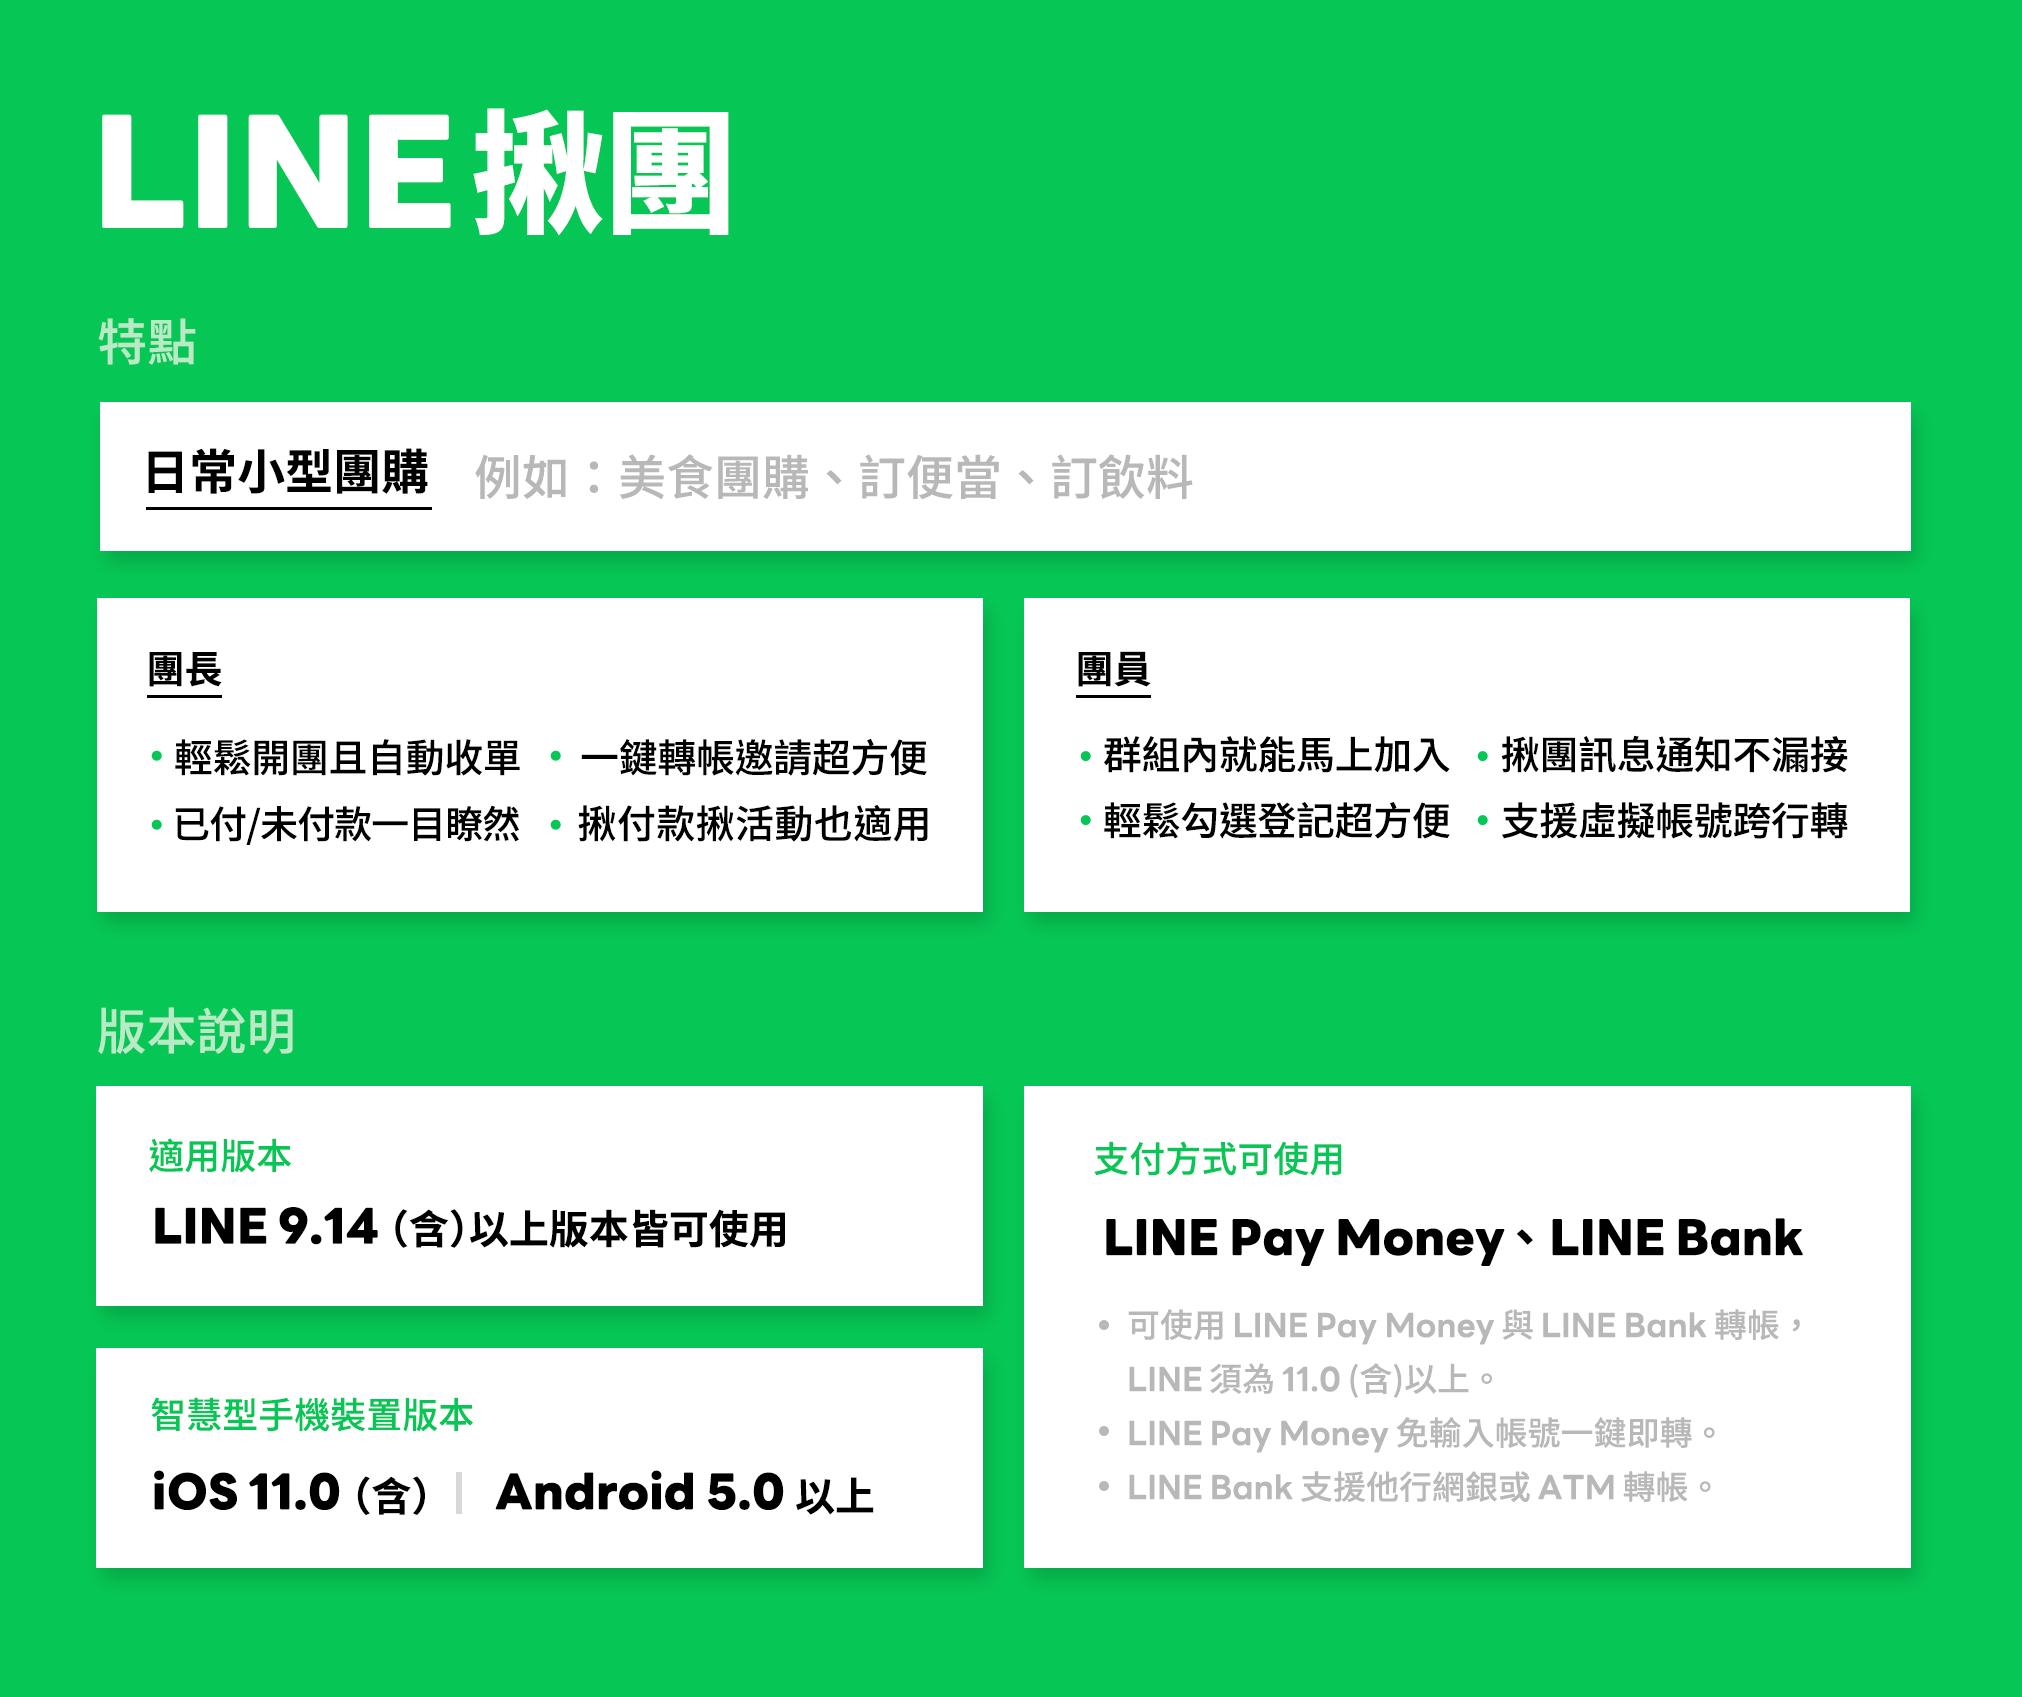 Line揪團 團購開團新功能 透過LinePay、LineBank快速收款